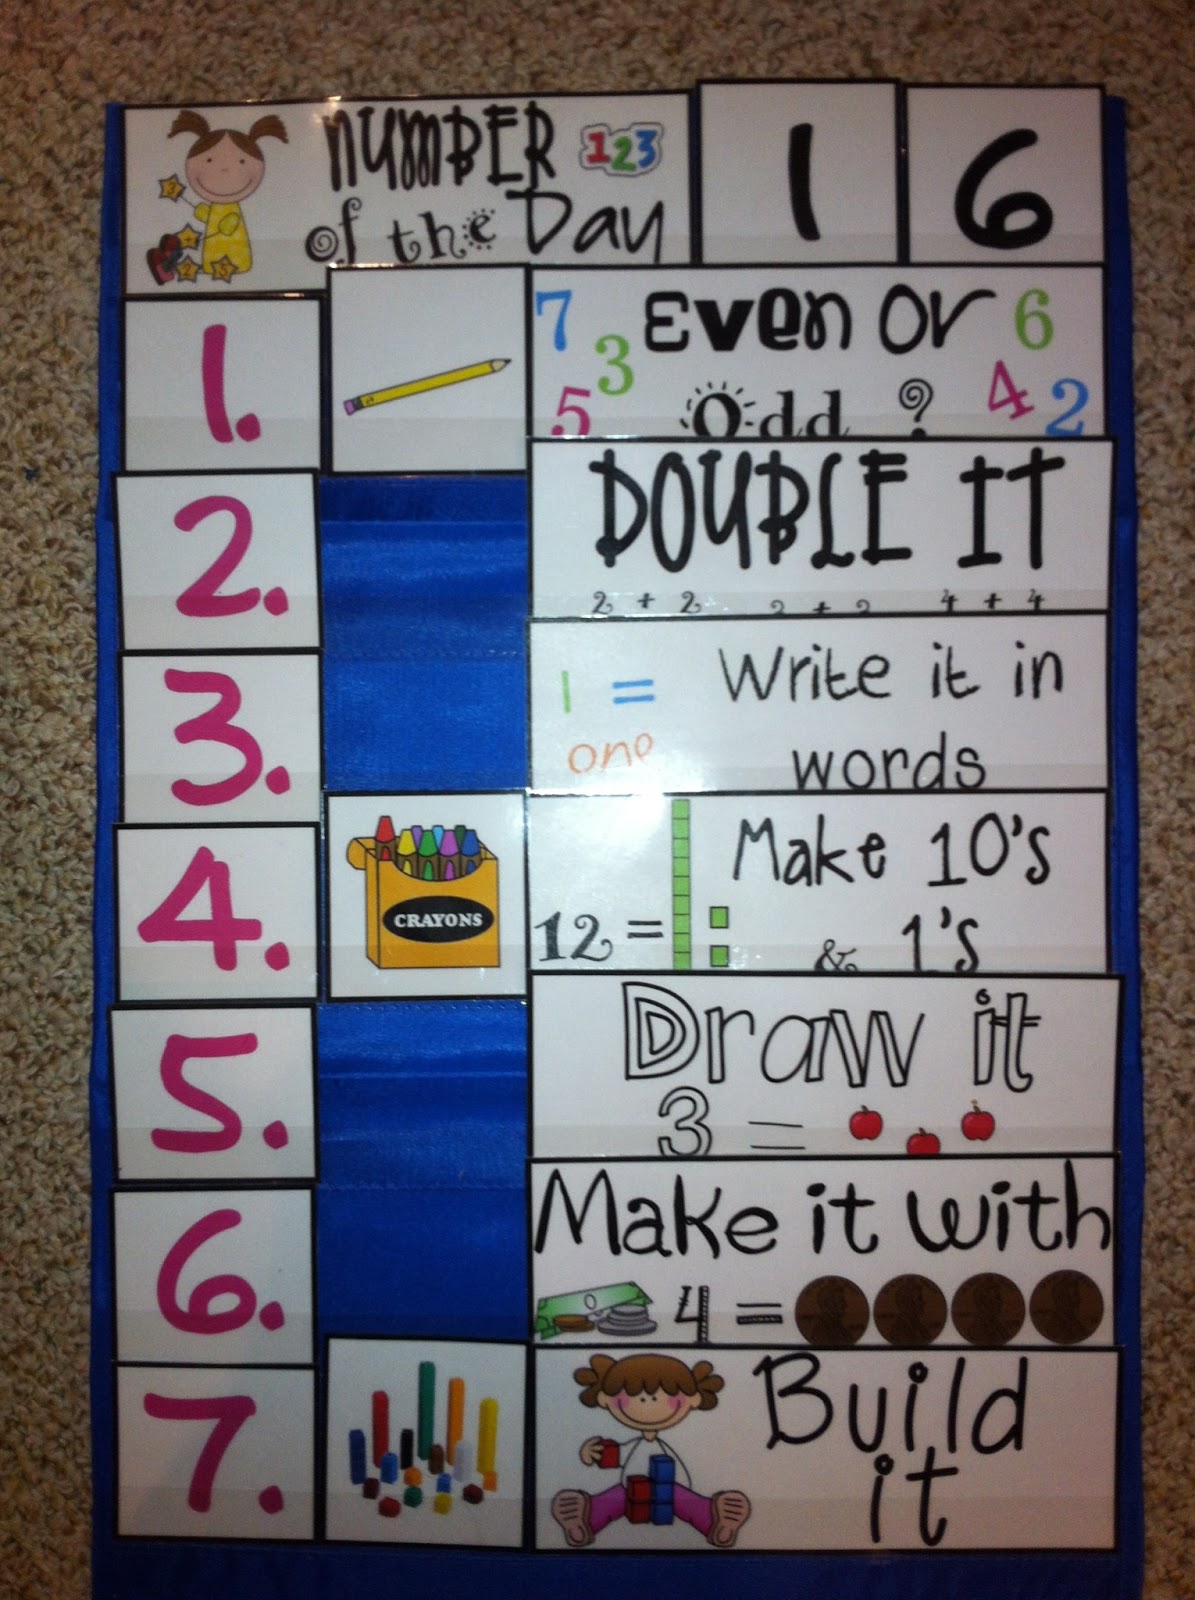 Mrs. Bond's Fantastic 1st Grade Journey: Number of the Day Pocket Chart